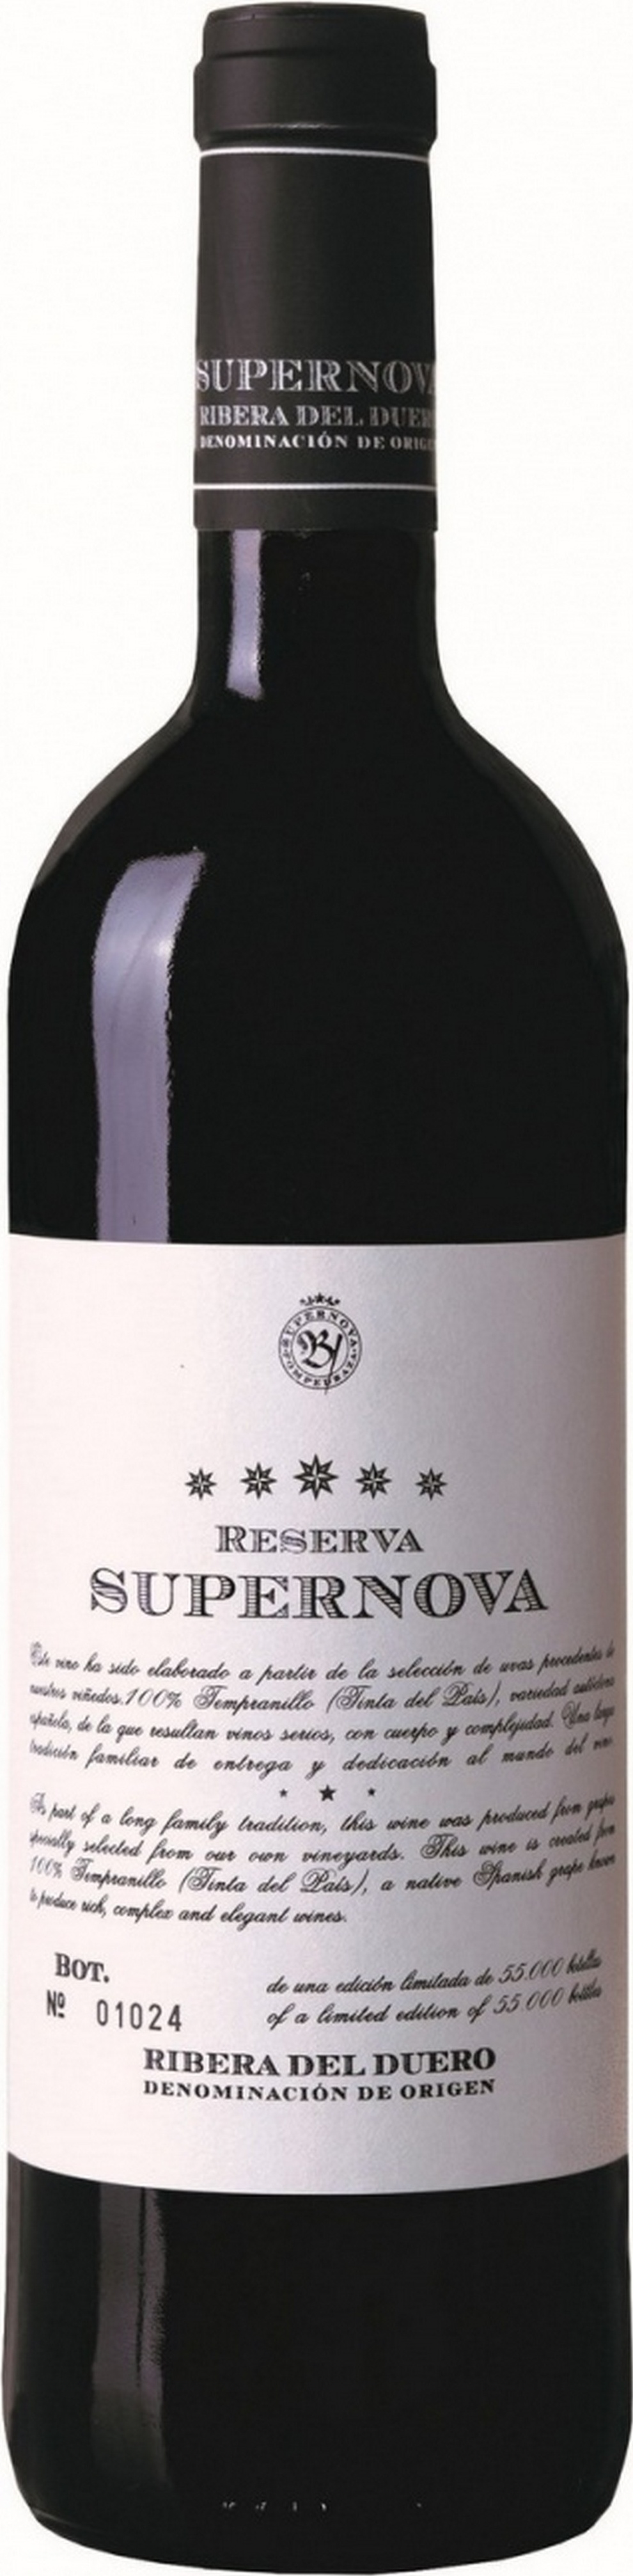 supernova-reserva-2015